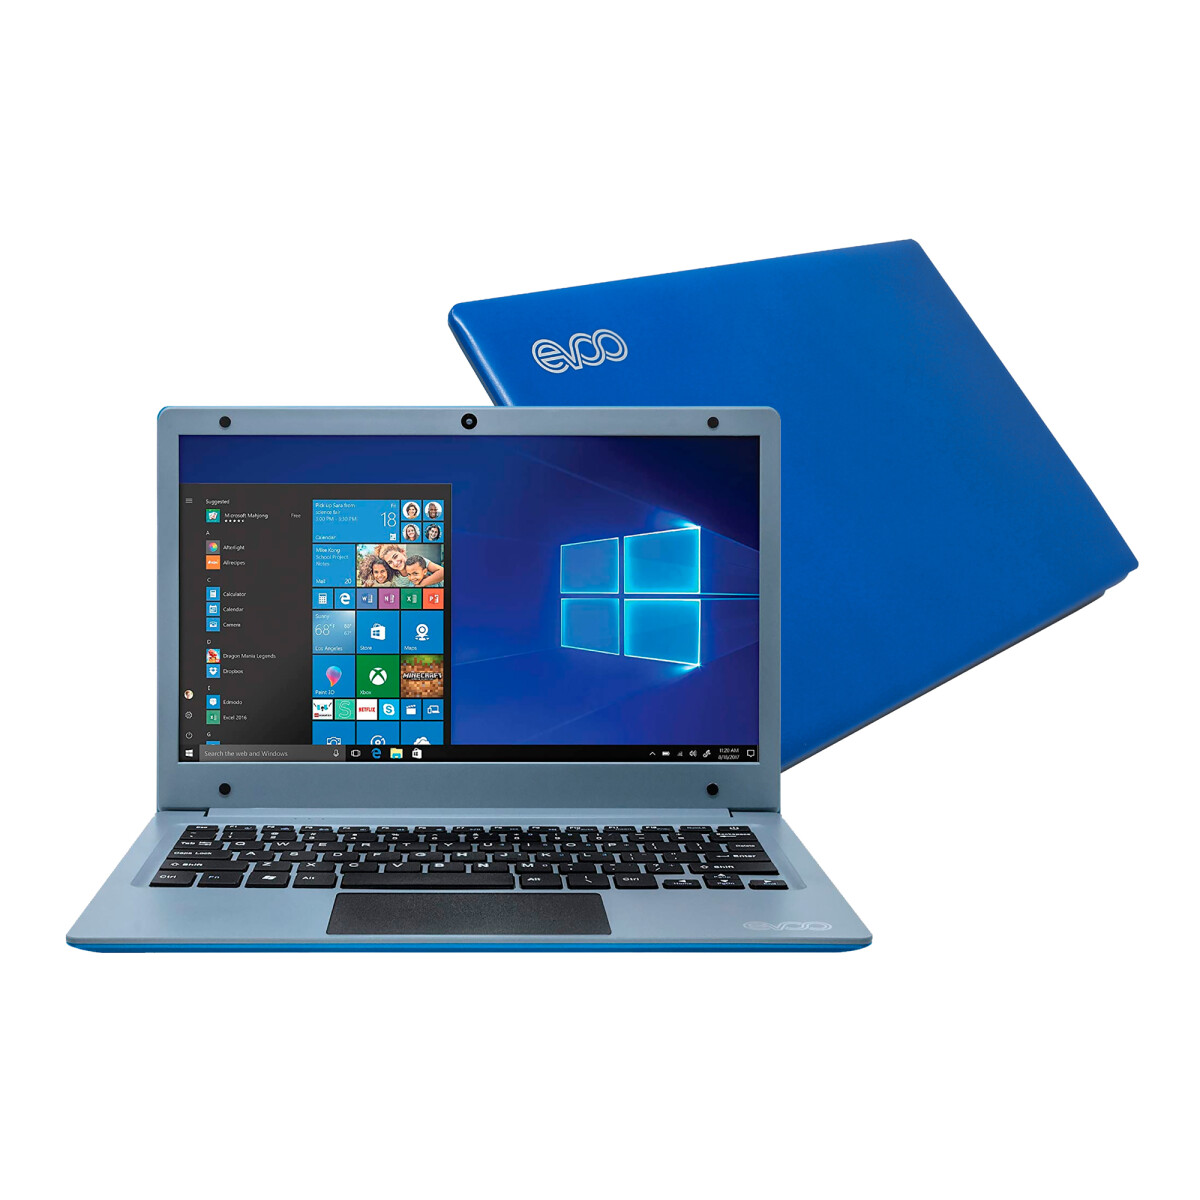 Evoo - Notebook EV-C-116-7 - 11,6" Ips. Intel Celeron N4000. Intel Uhd 600. Windows. Ram 4GB / Emmc - 001 